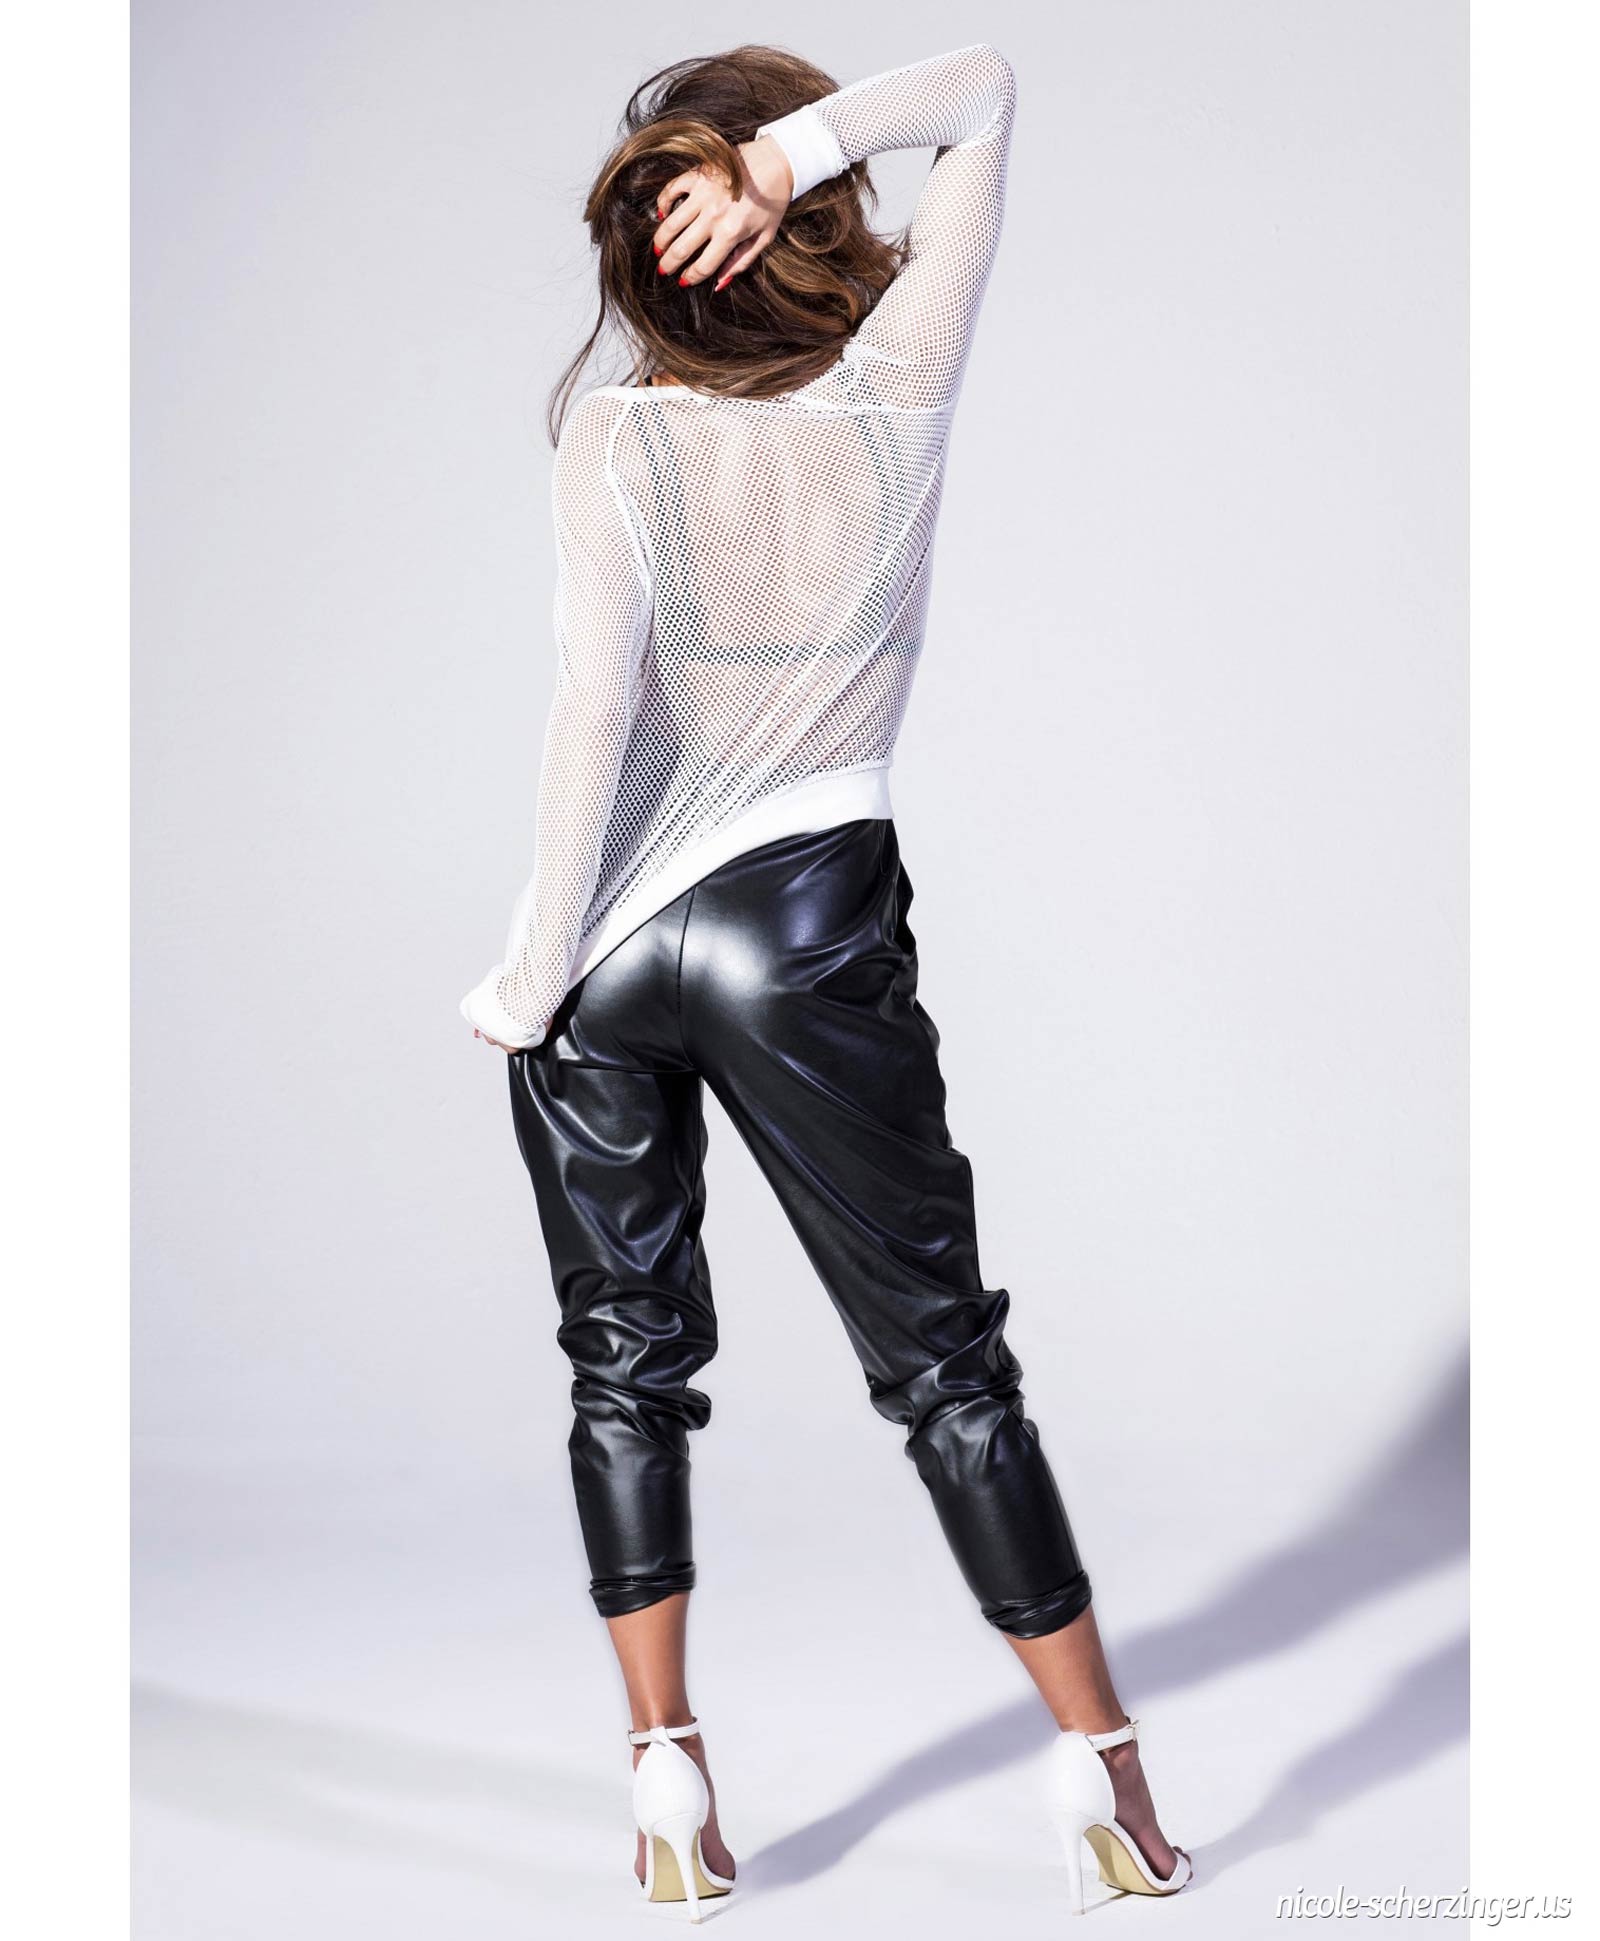 Nicole Scherzinger photoshoot for Nicole x Missguided Collection